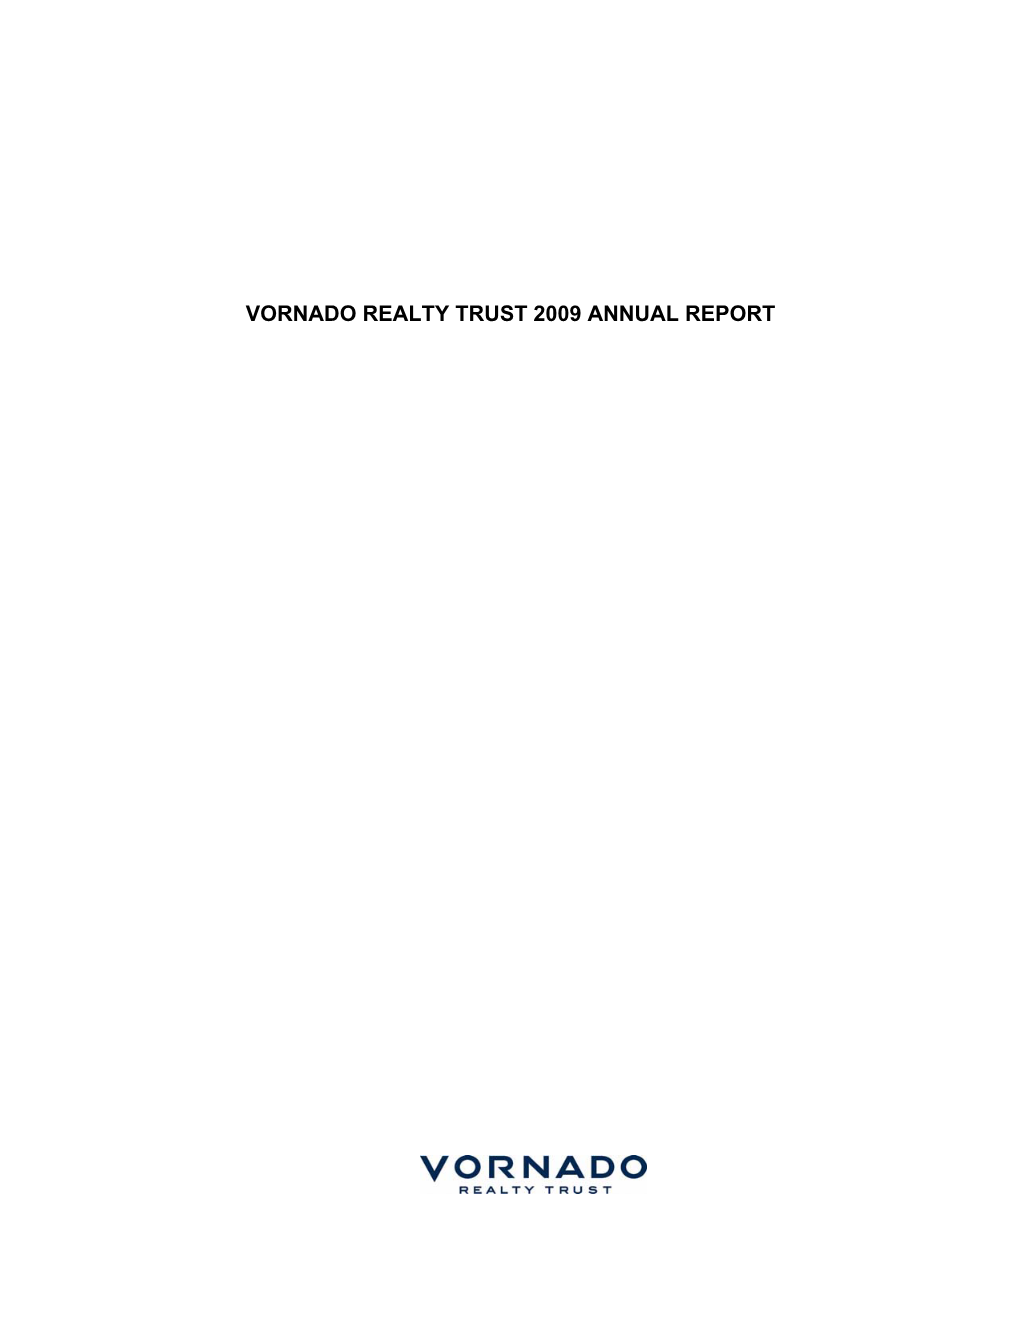 Vornado Realty Trust 2009 Annual Report